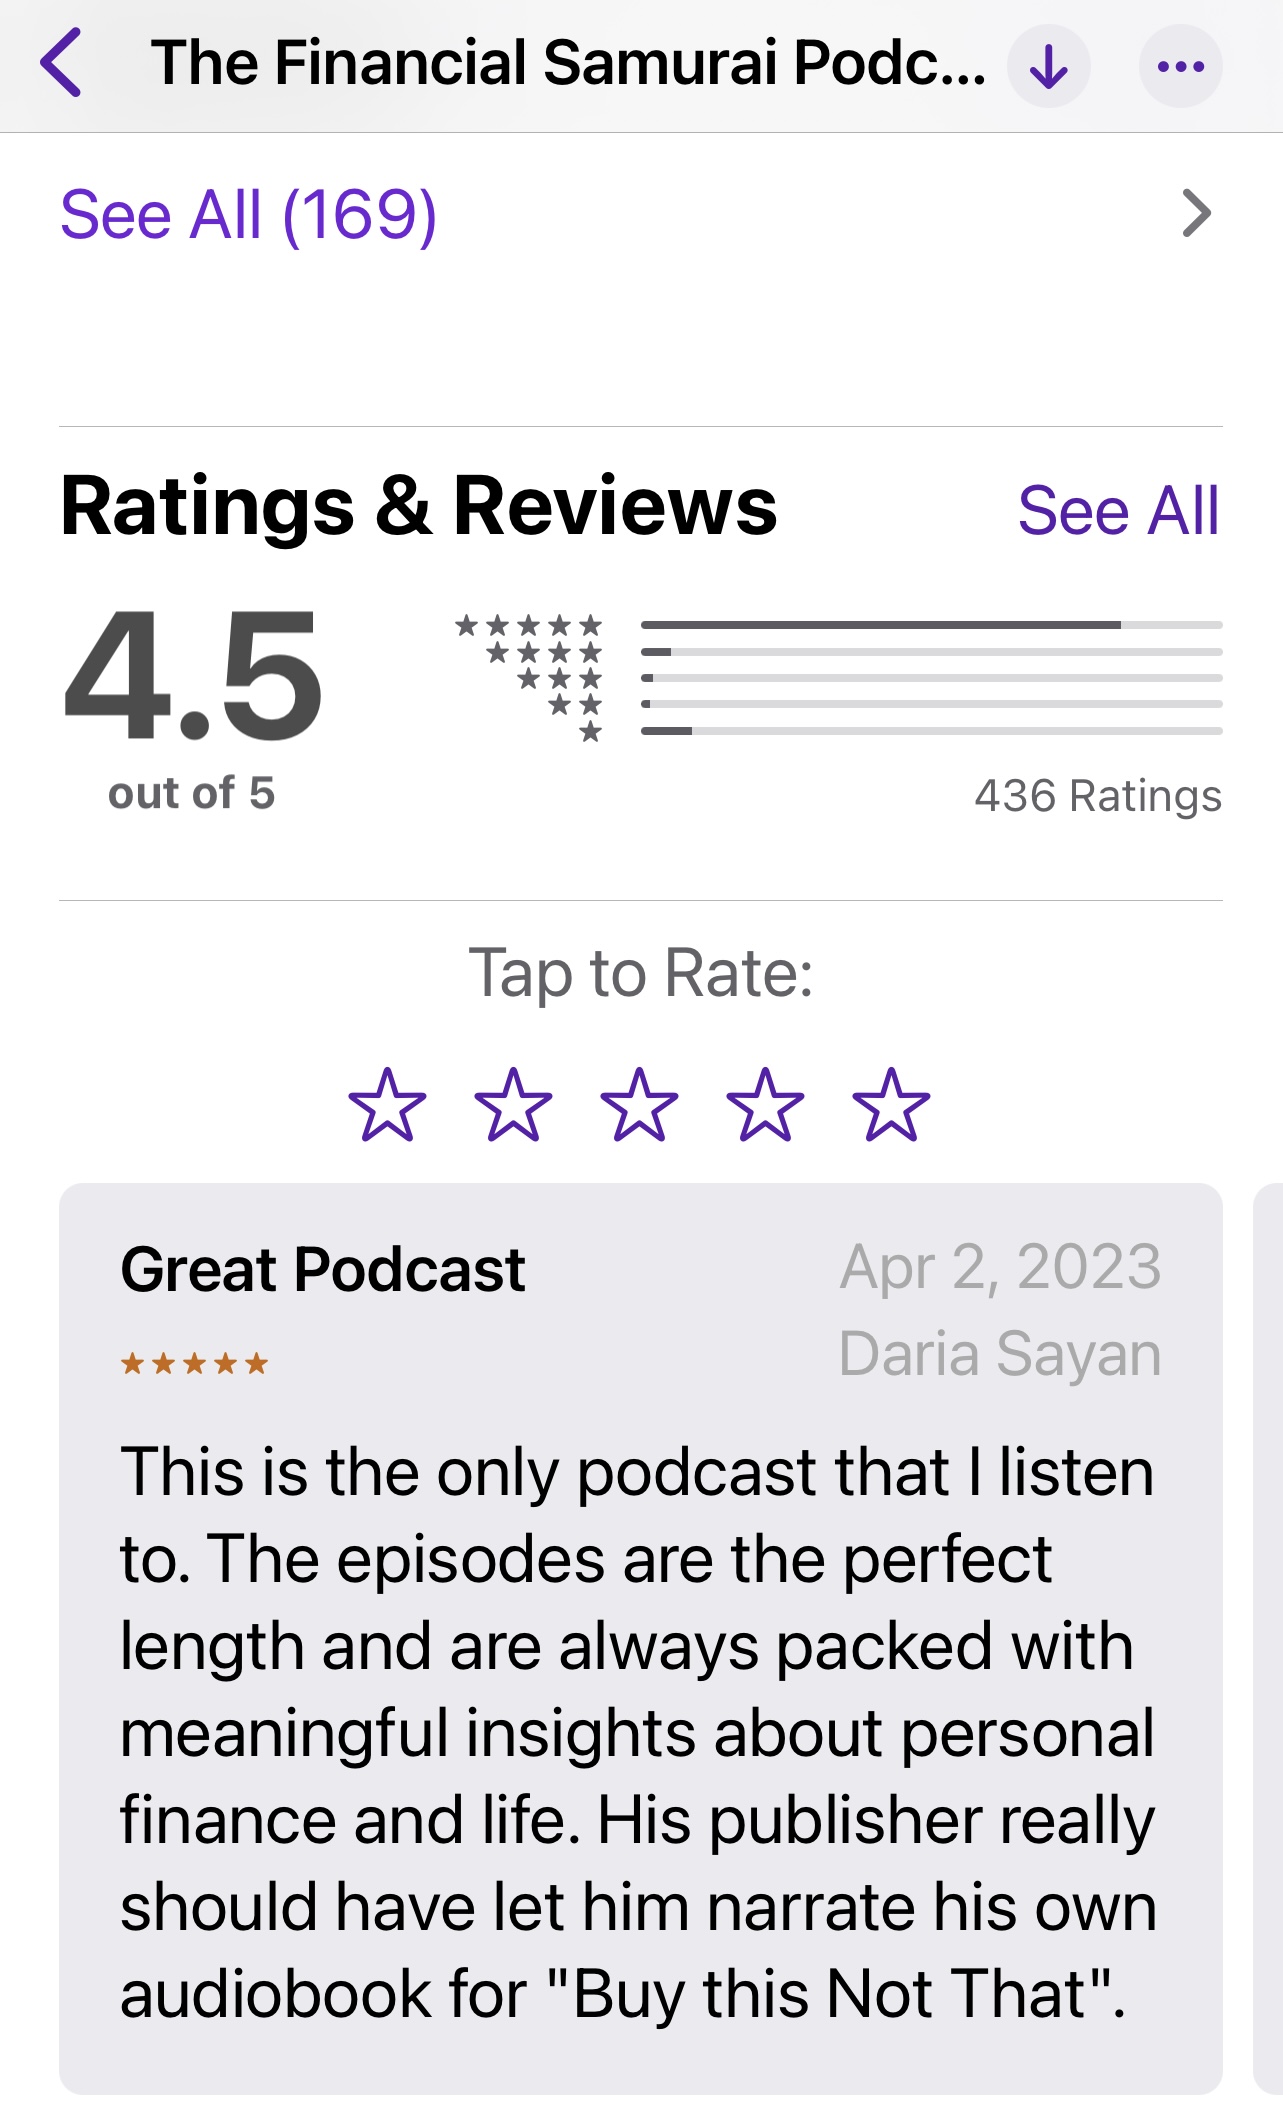 Financial Samurai podcast ratings dumbbell approach